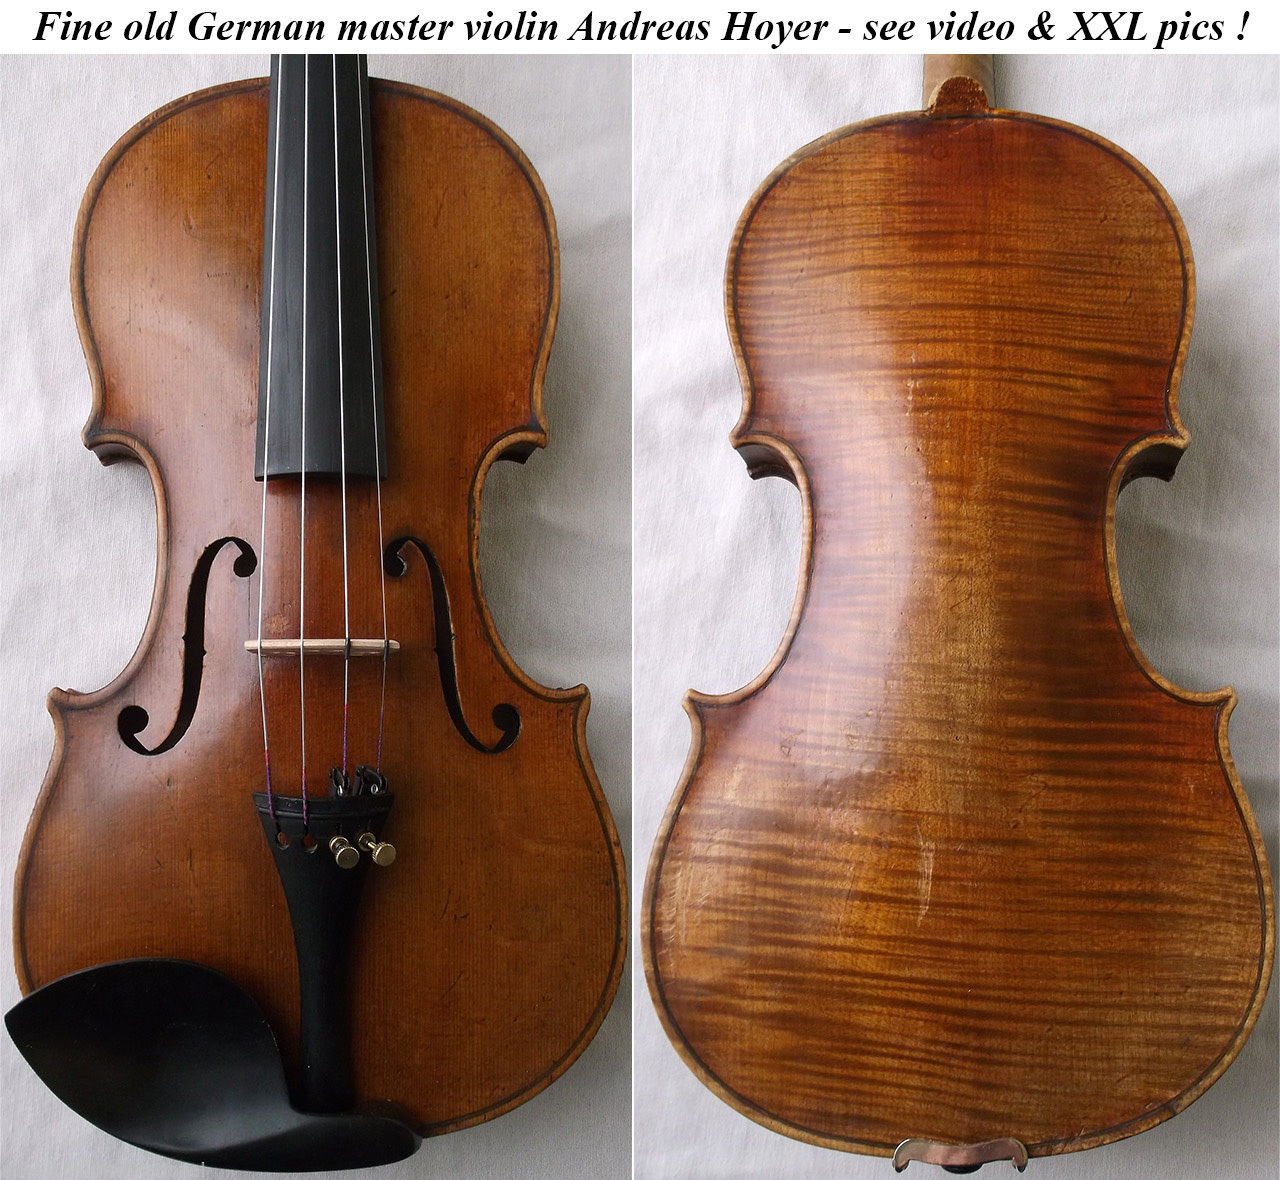 andreas hoyer violin